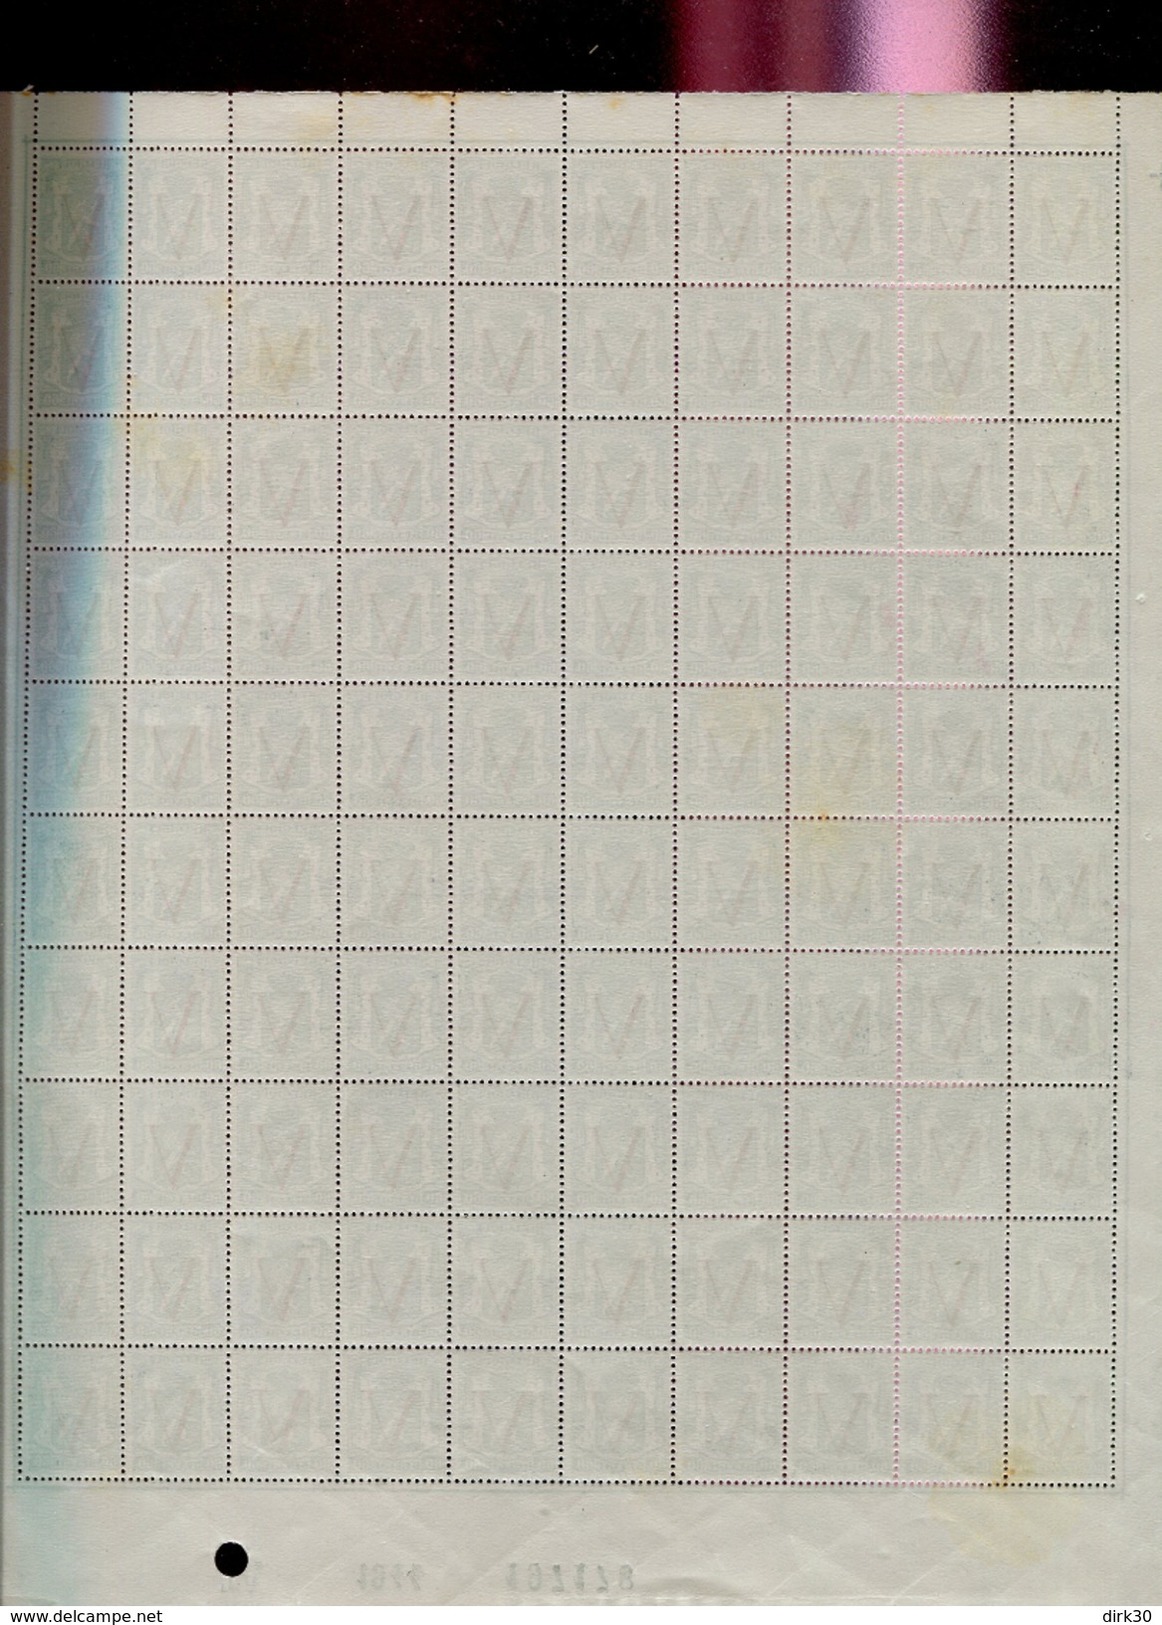 Belgie 1944 670/73 Liberation Heraldieke Leeuw Full sheet of 100 OCB++60&euro; + Luppi(roestvlekjes zie scans)